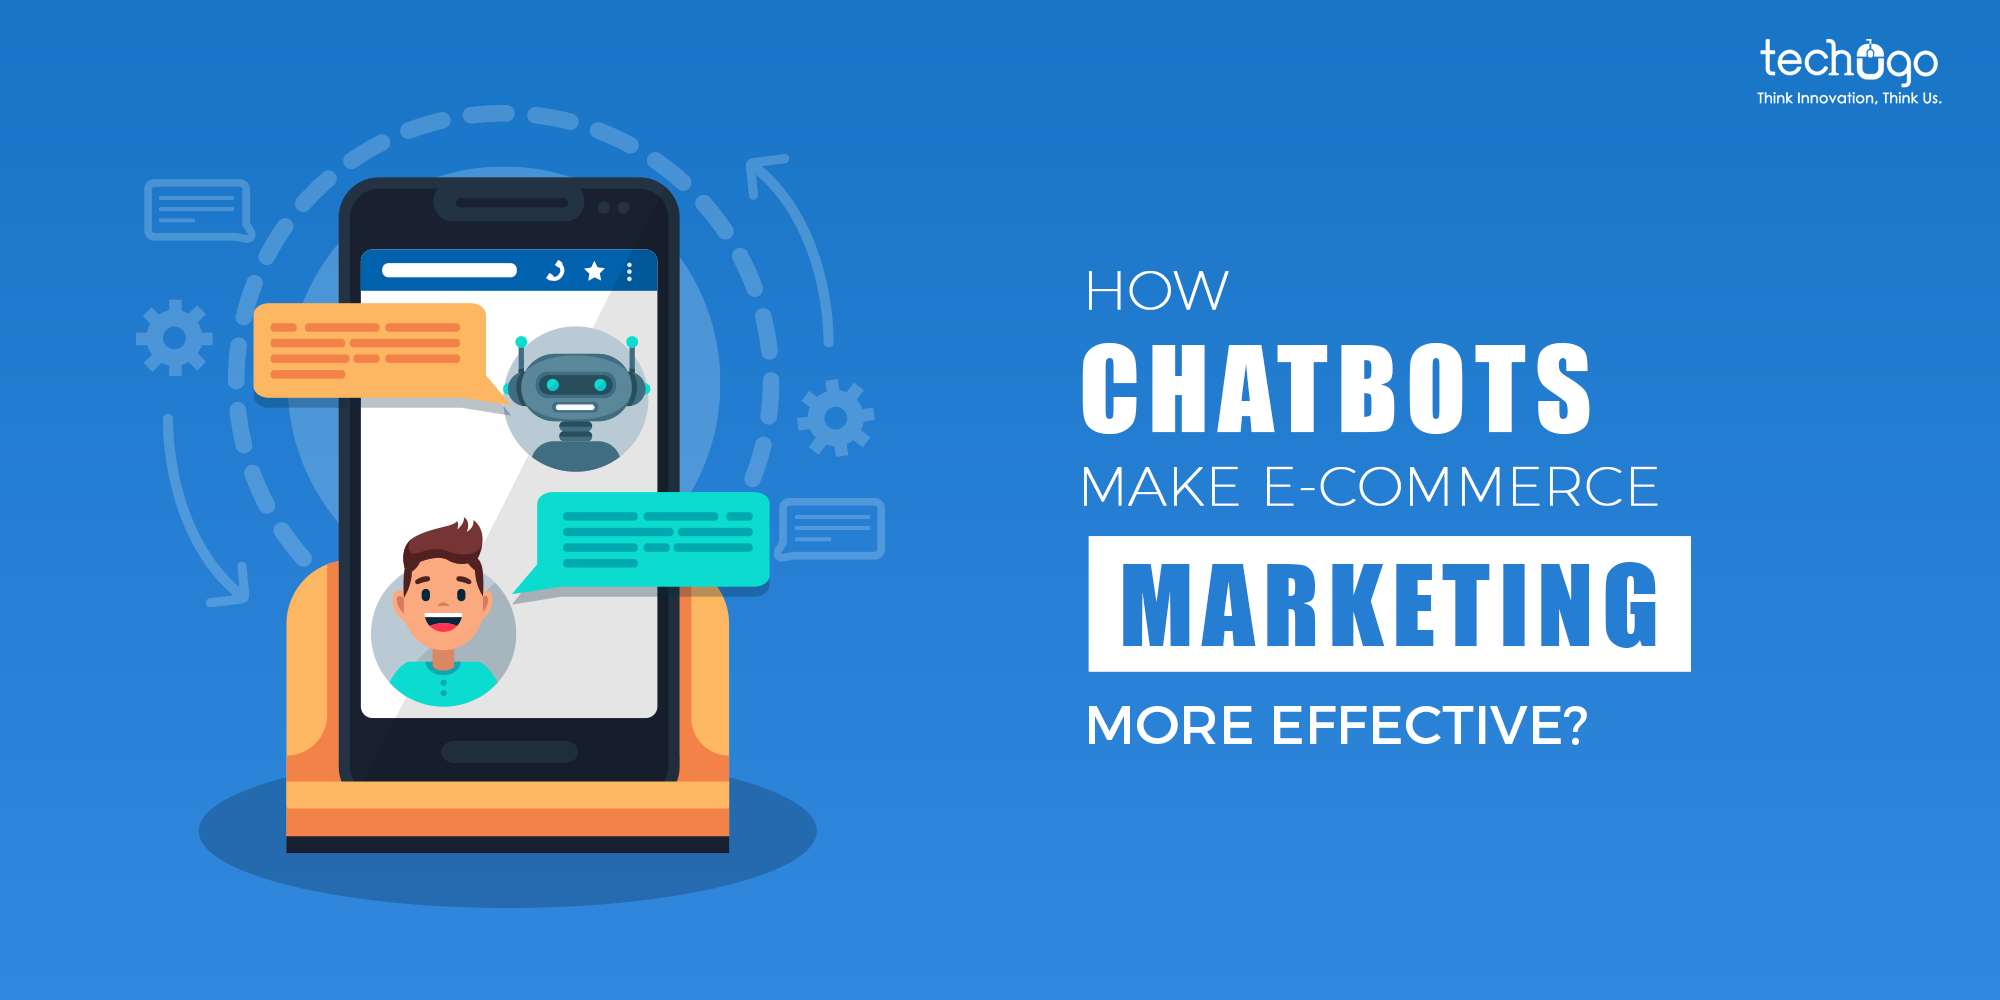 How Chatbots Make E-Commerce Marketing More Effective?